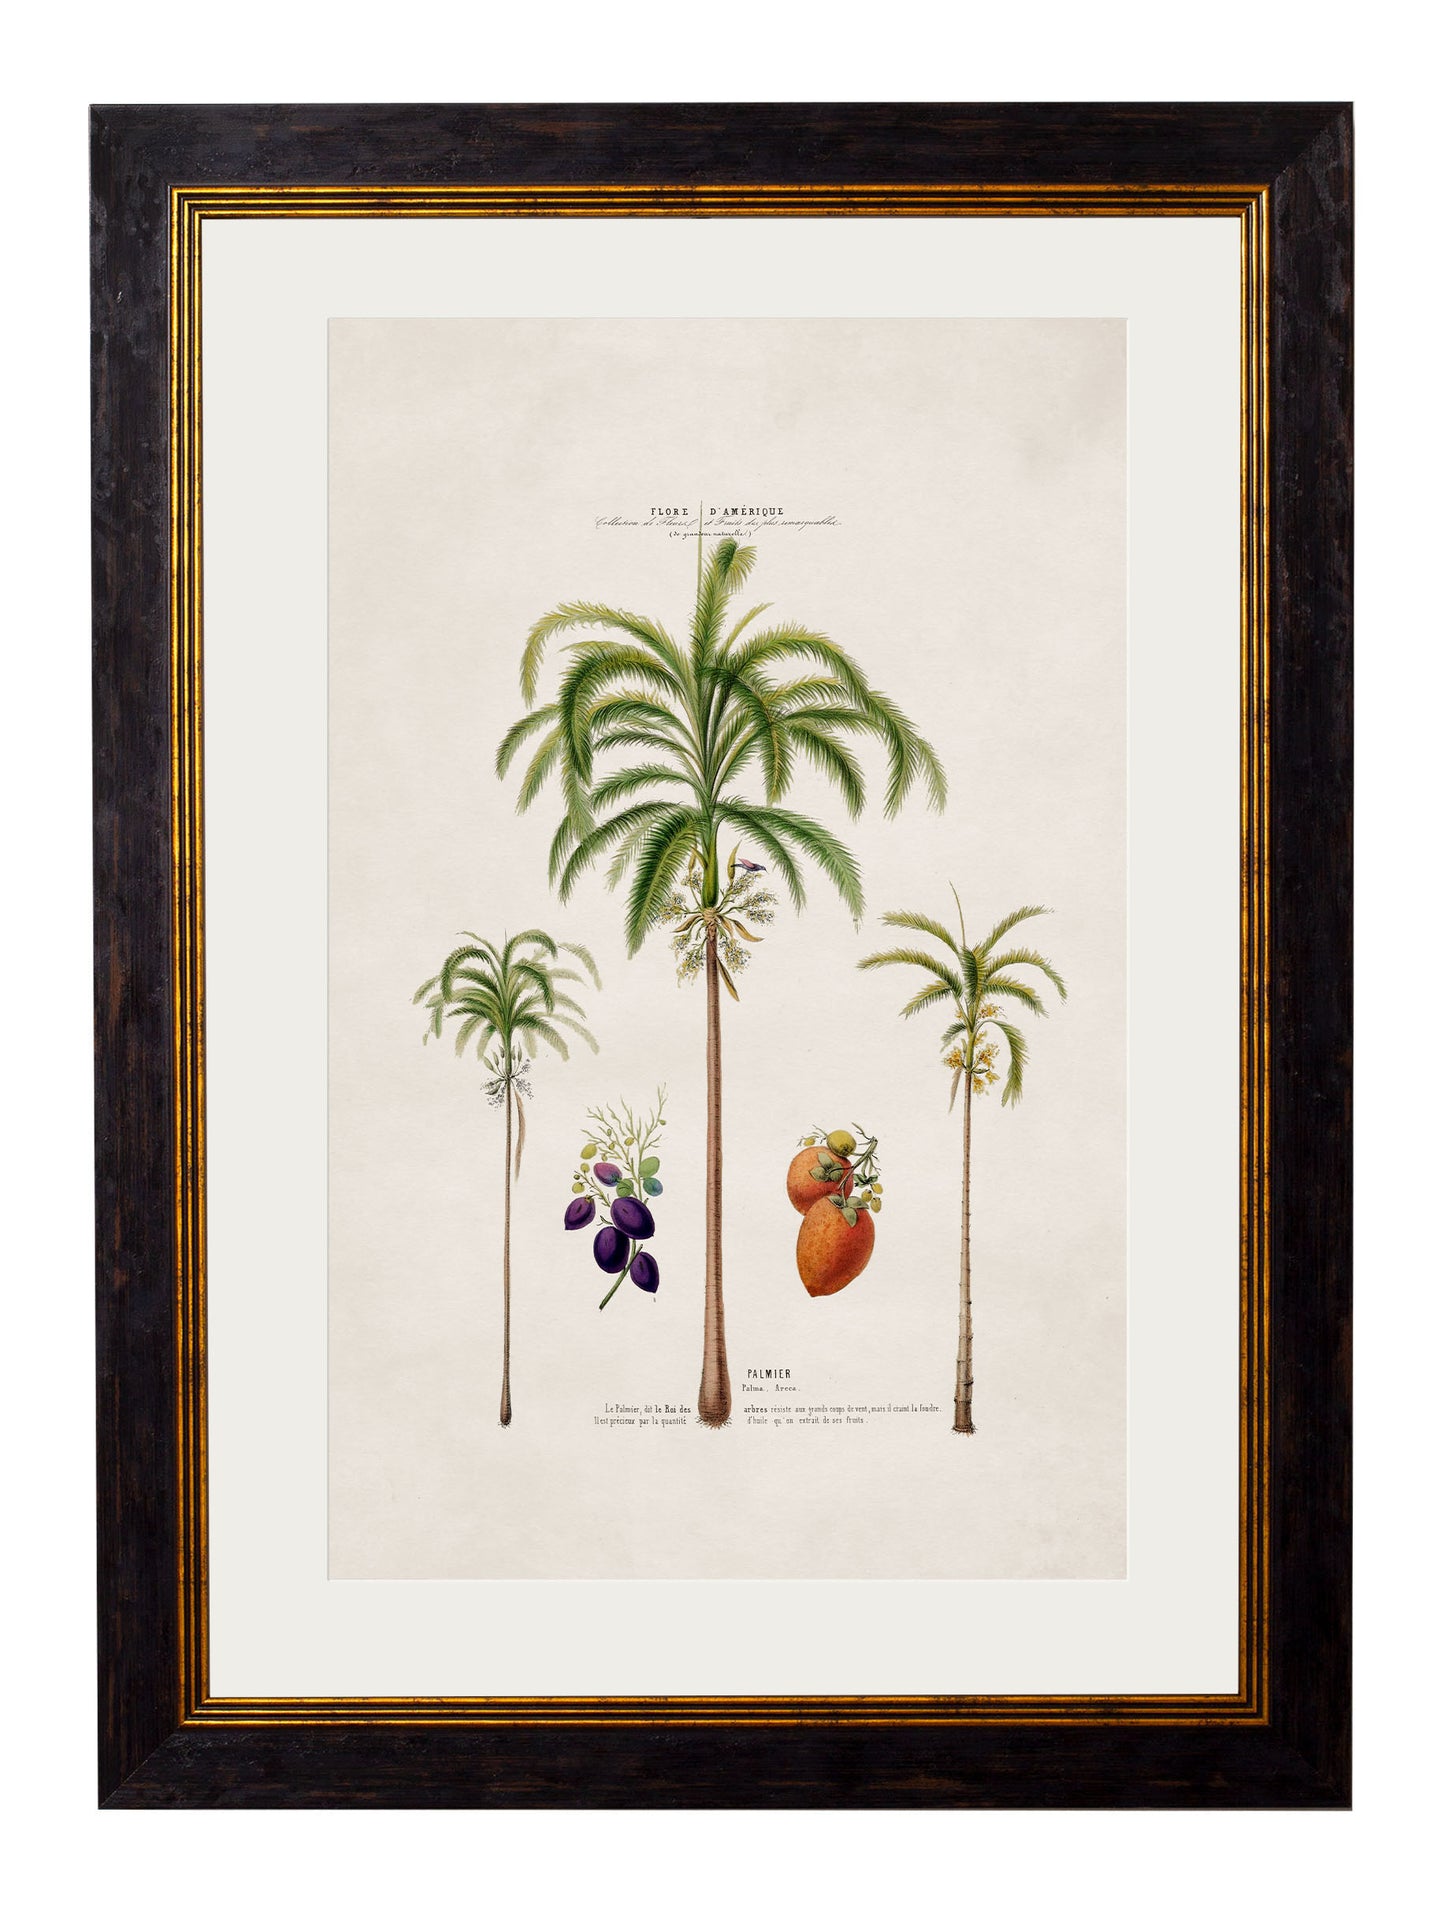 Framed Studies of Palm Trees Prints